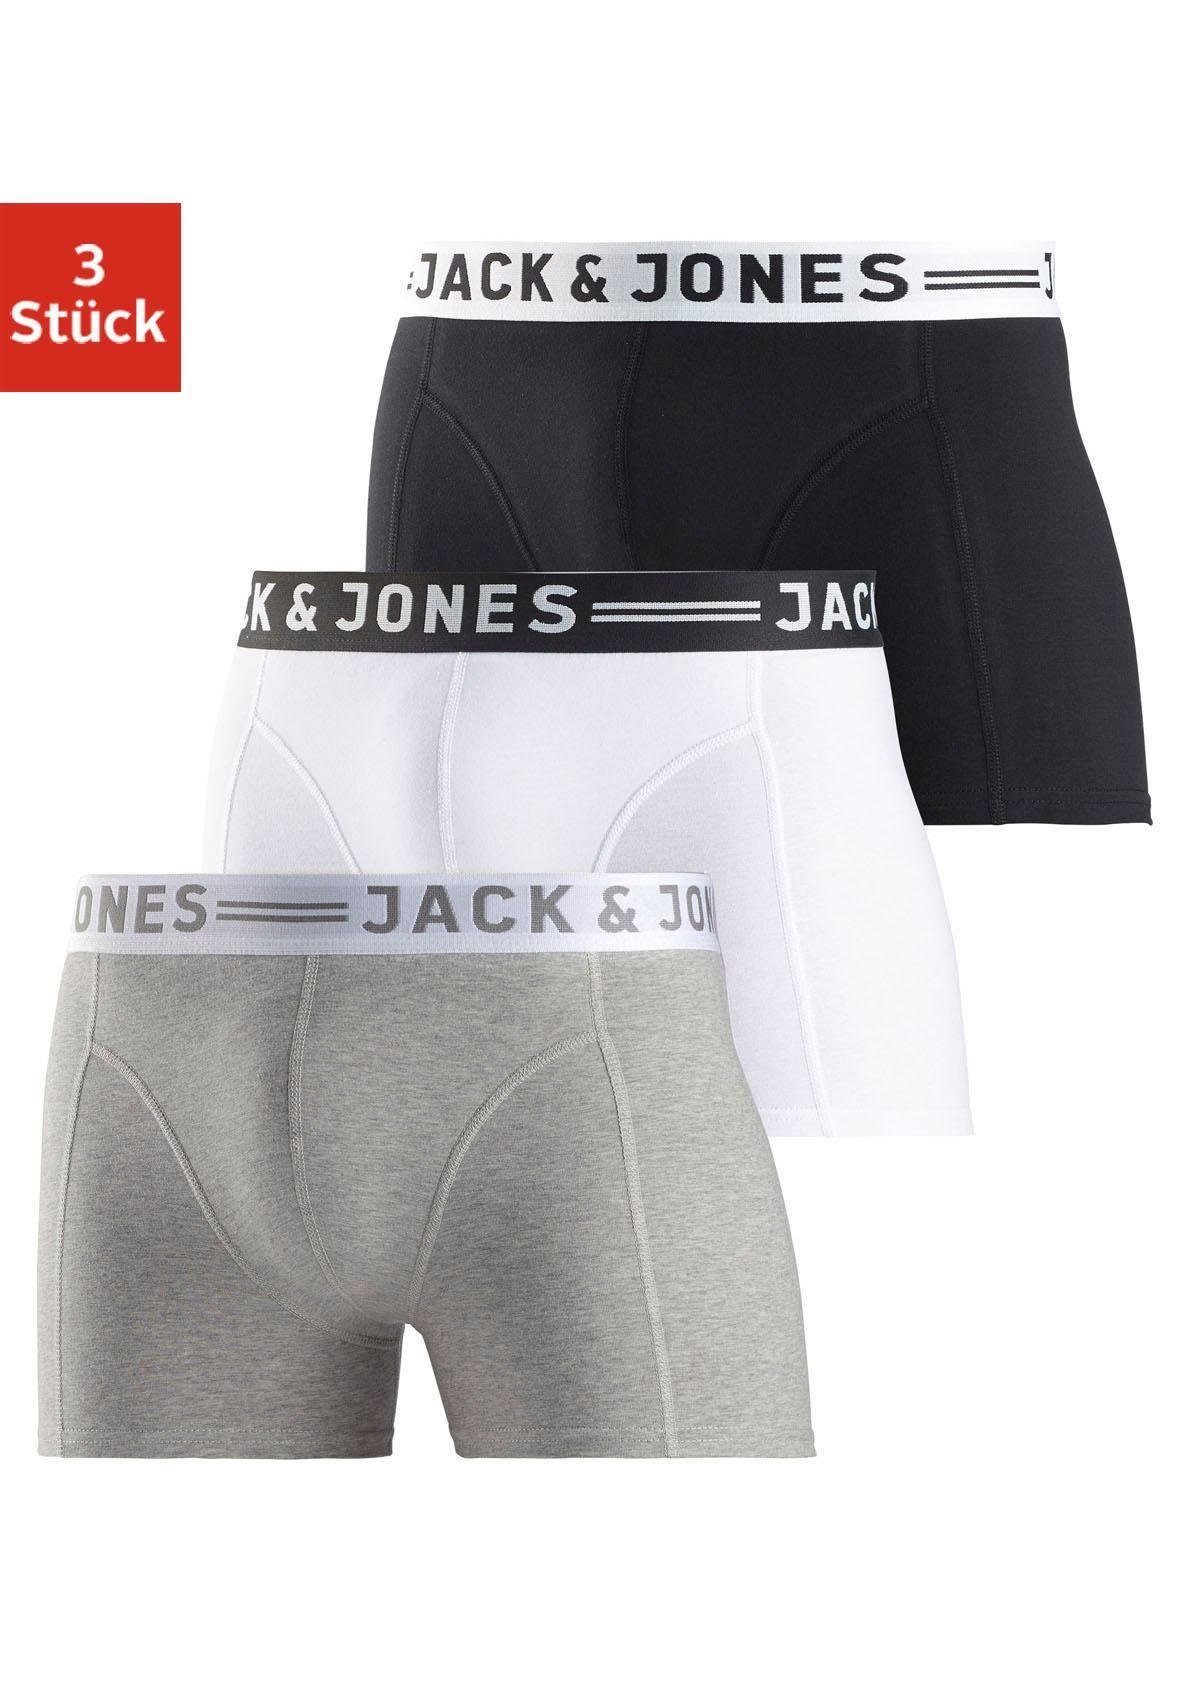 Jack & Jones Boxer Sense Trunks (Packung, 3-St) schwarz, weiß, grau-meliert